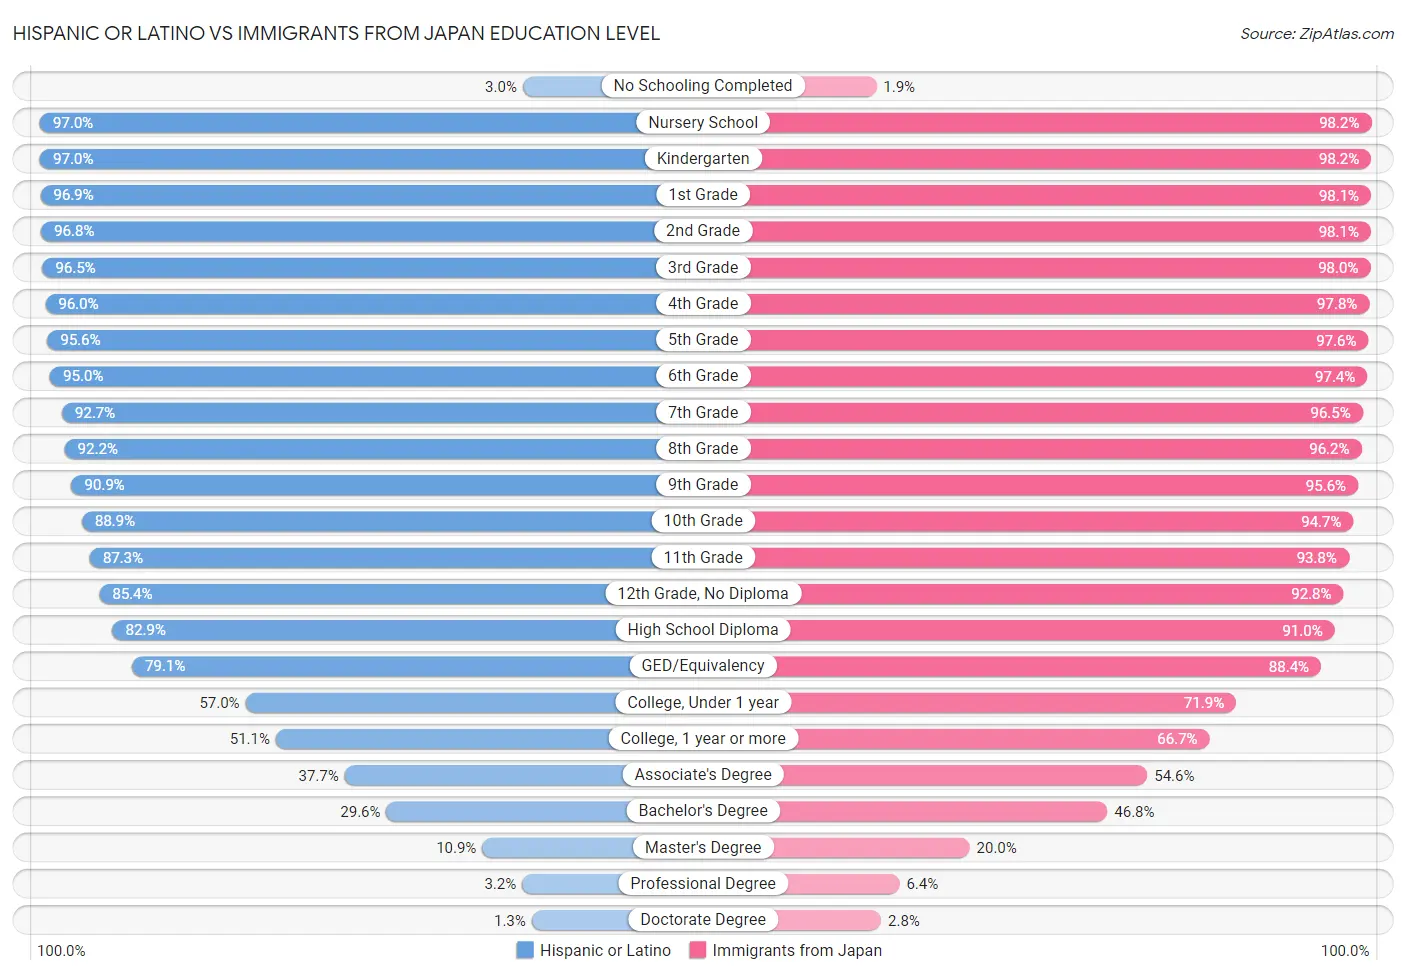 Hispanic or Latino vs Immigrants from Japan Education Level